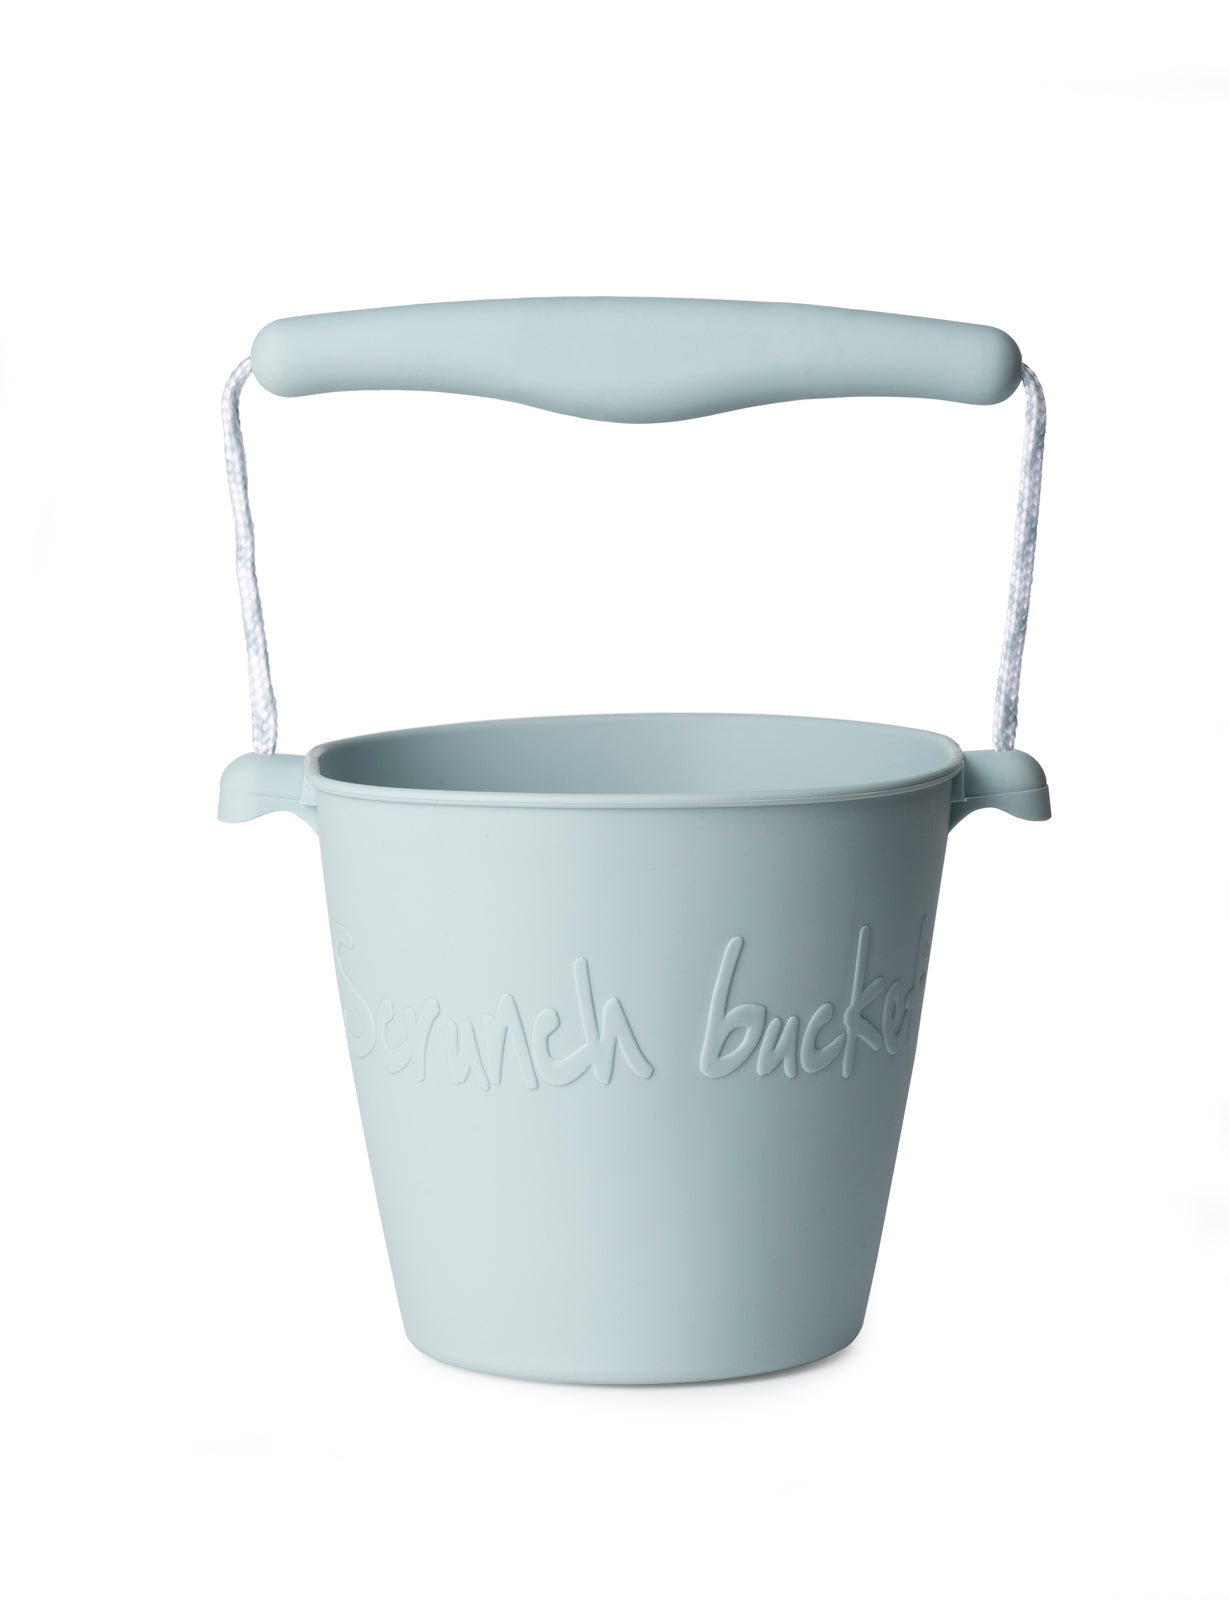 Scrunch Buckets